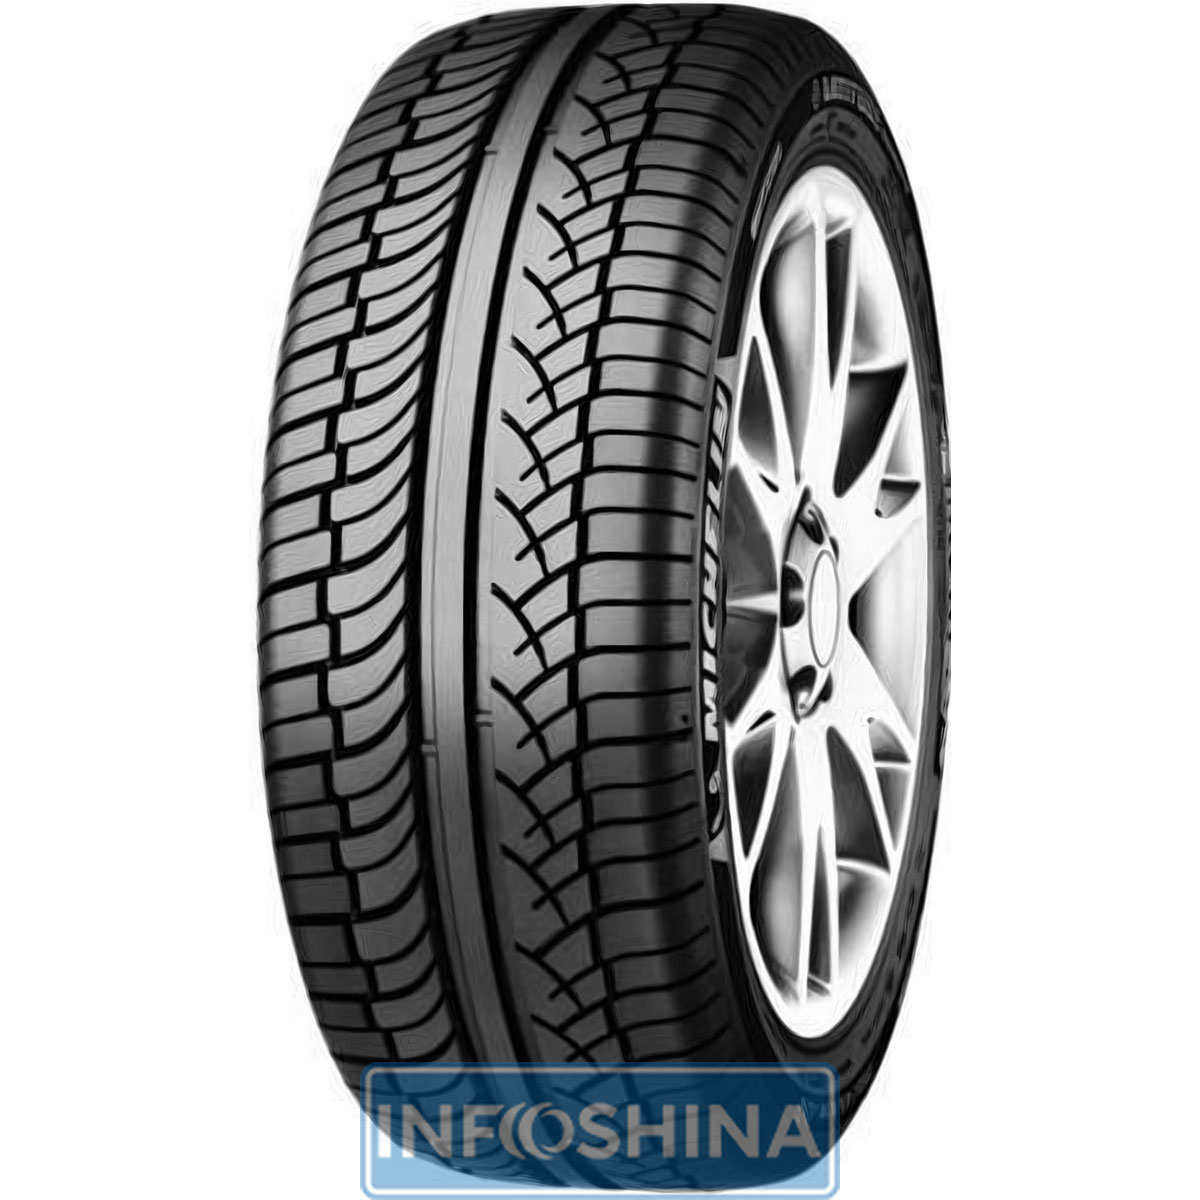 Купить шины Michelin Latitude Diamaris 255/60 R17 106V